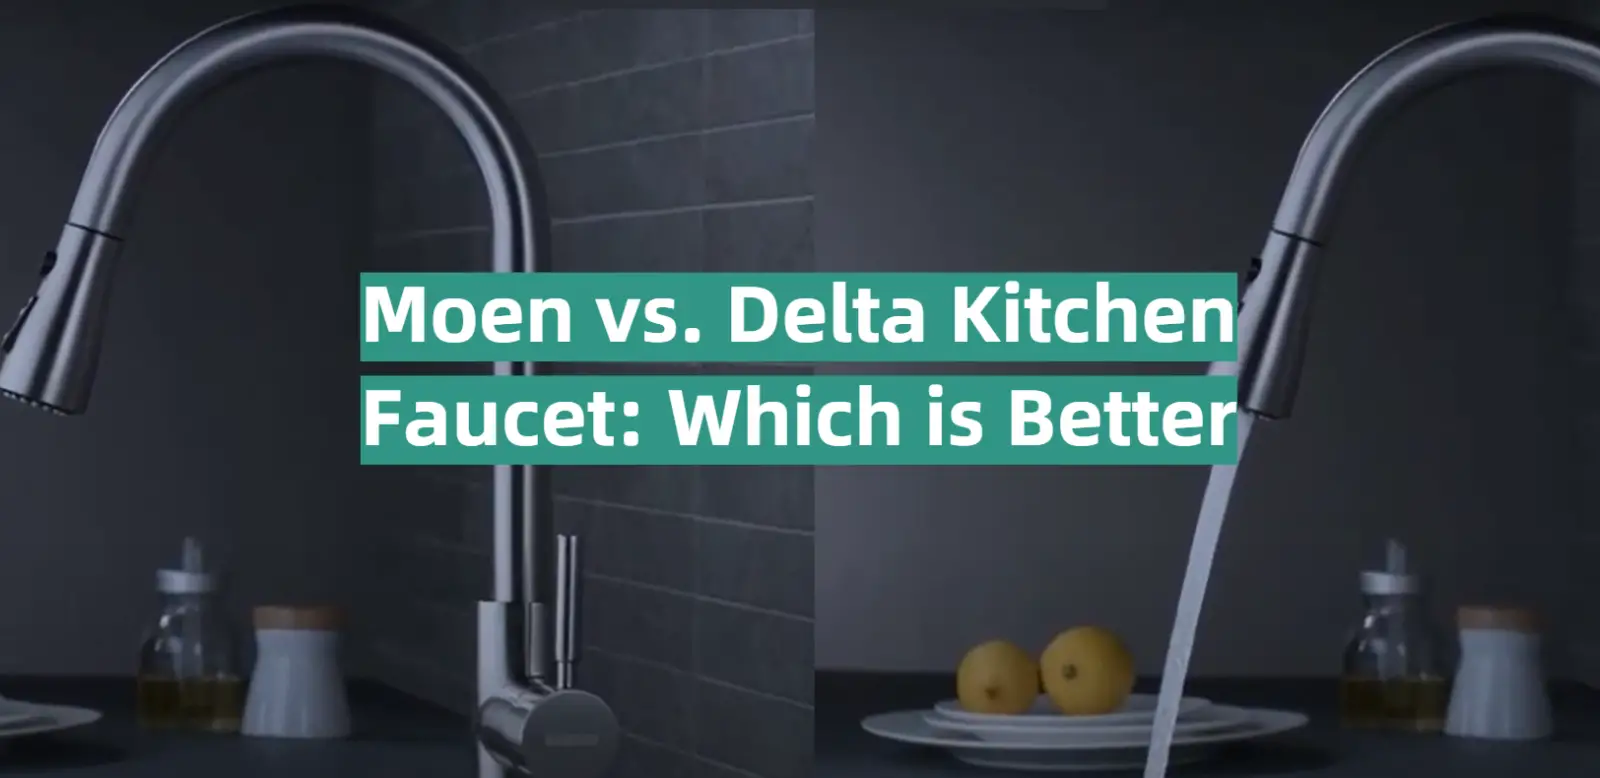 Moen vs. Delta Kitchen Faucet: Which is Better?